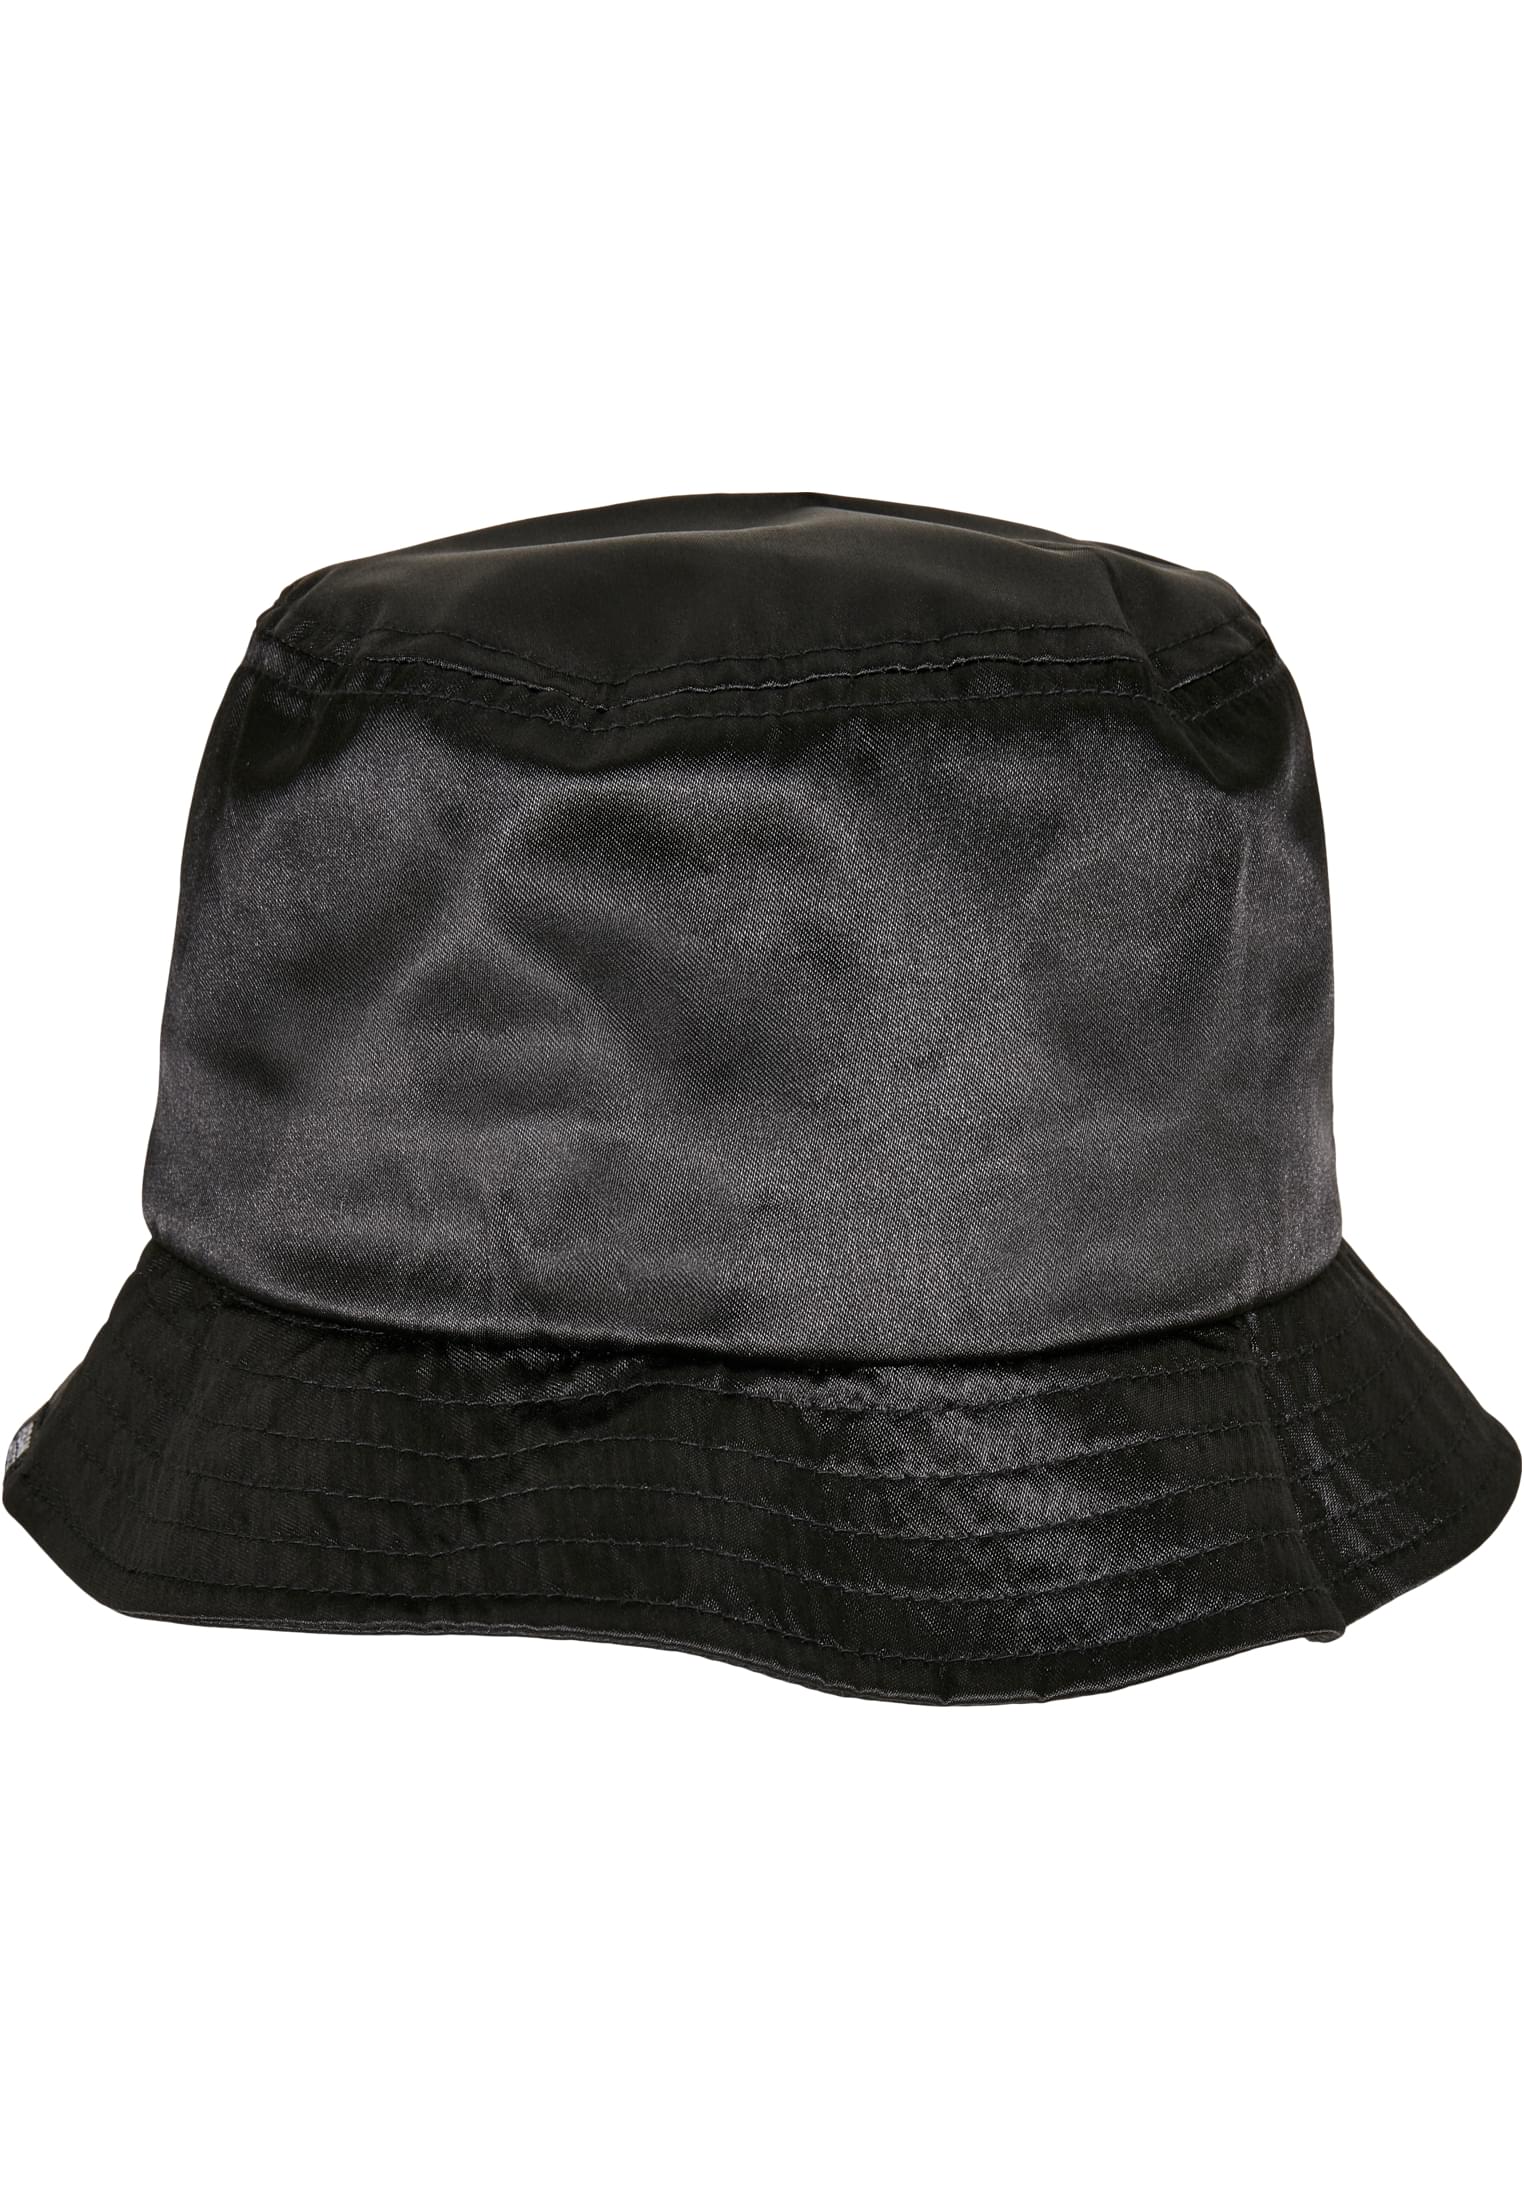 M?tzen Satin Bucket Hat in Farbe black